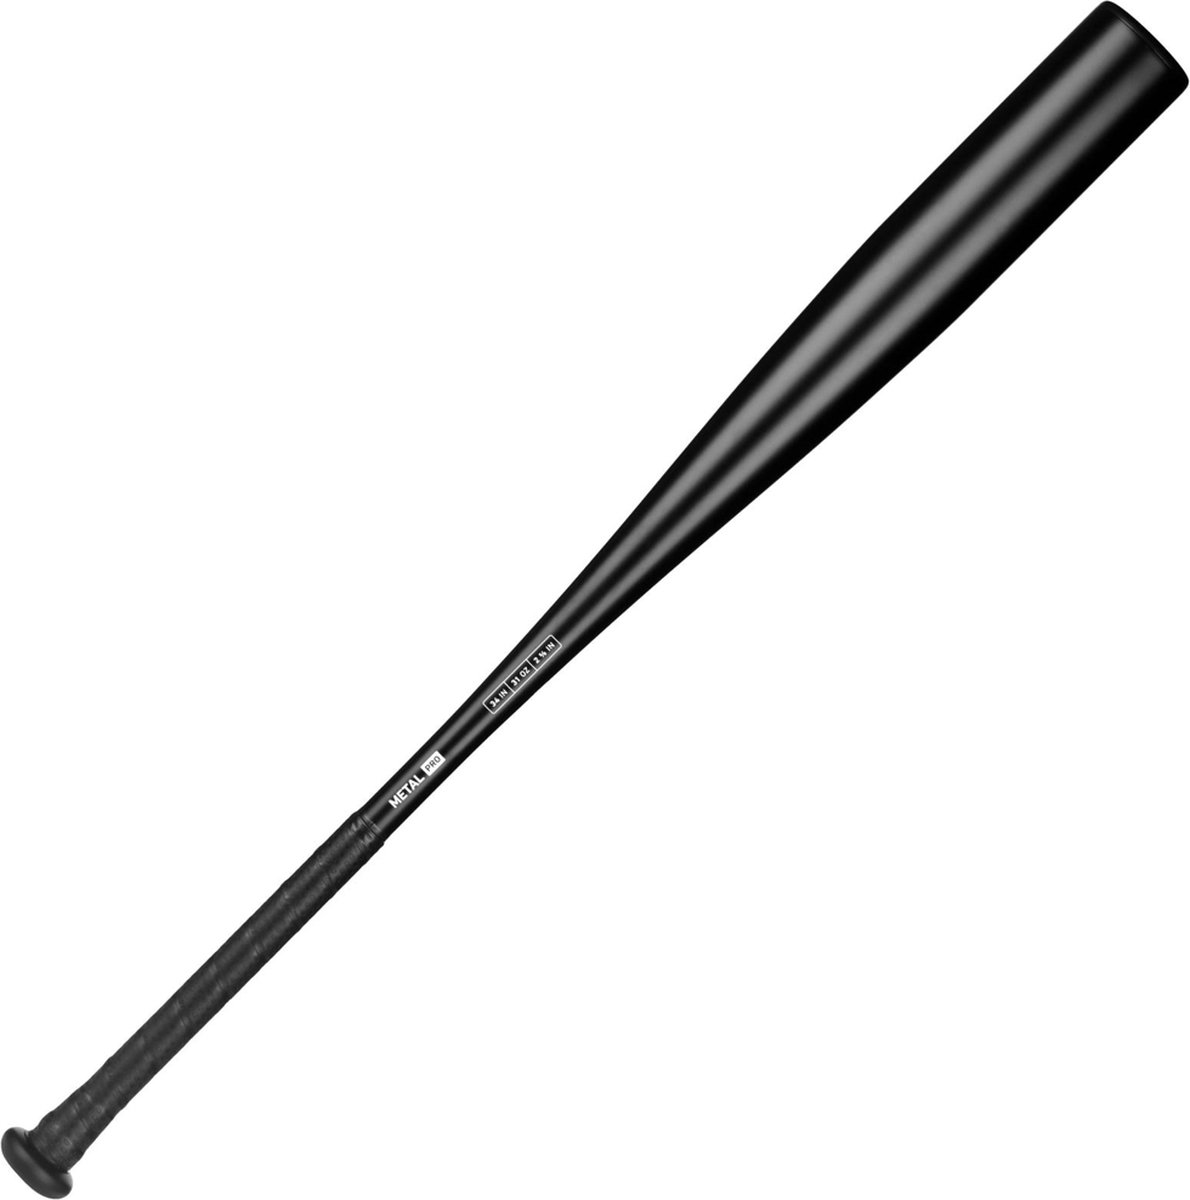 Stringking Baseball Bat Metal Pro BBCOR -3 33